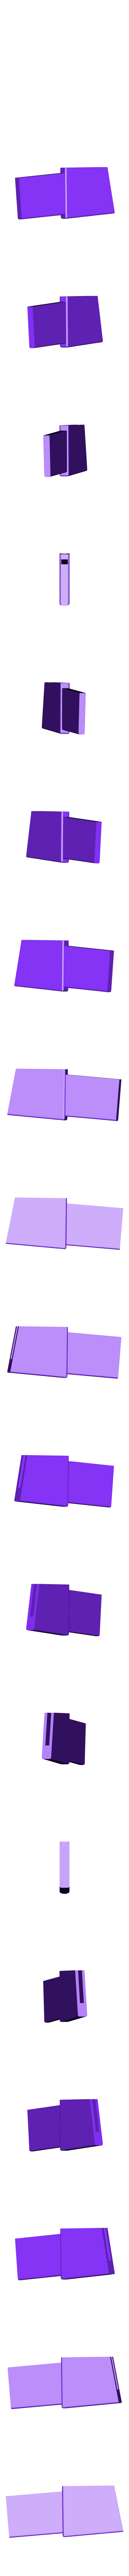 Right_Wing_Purple.stl Download free STL file Buzz Lightyear - Multi Color Print • 3D printer object, ChaosCoreTech